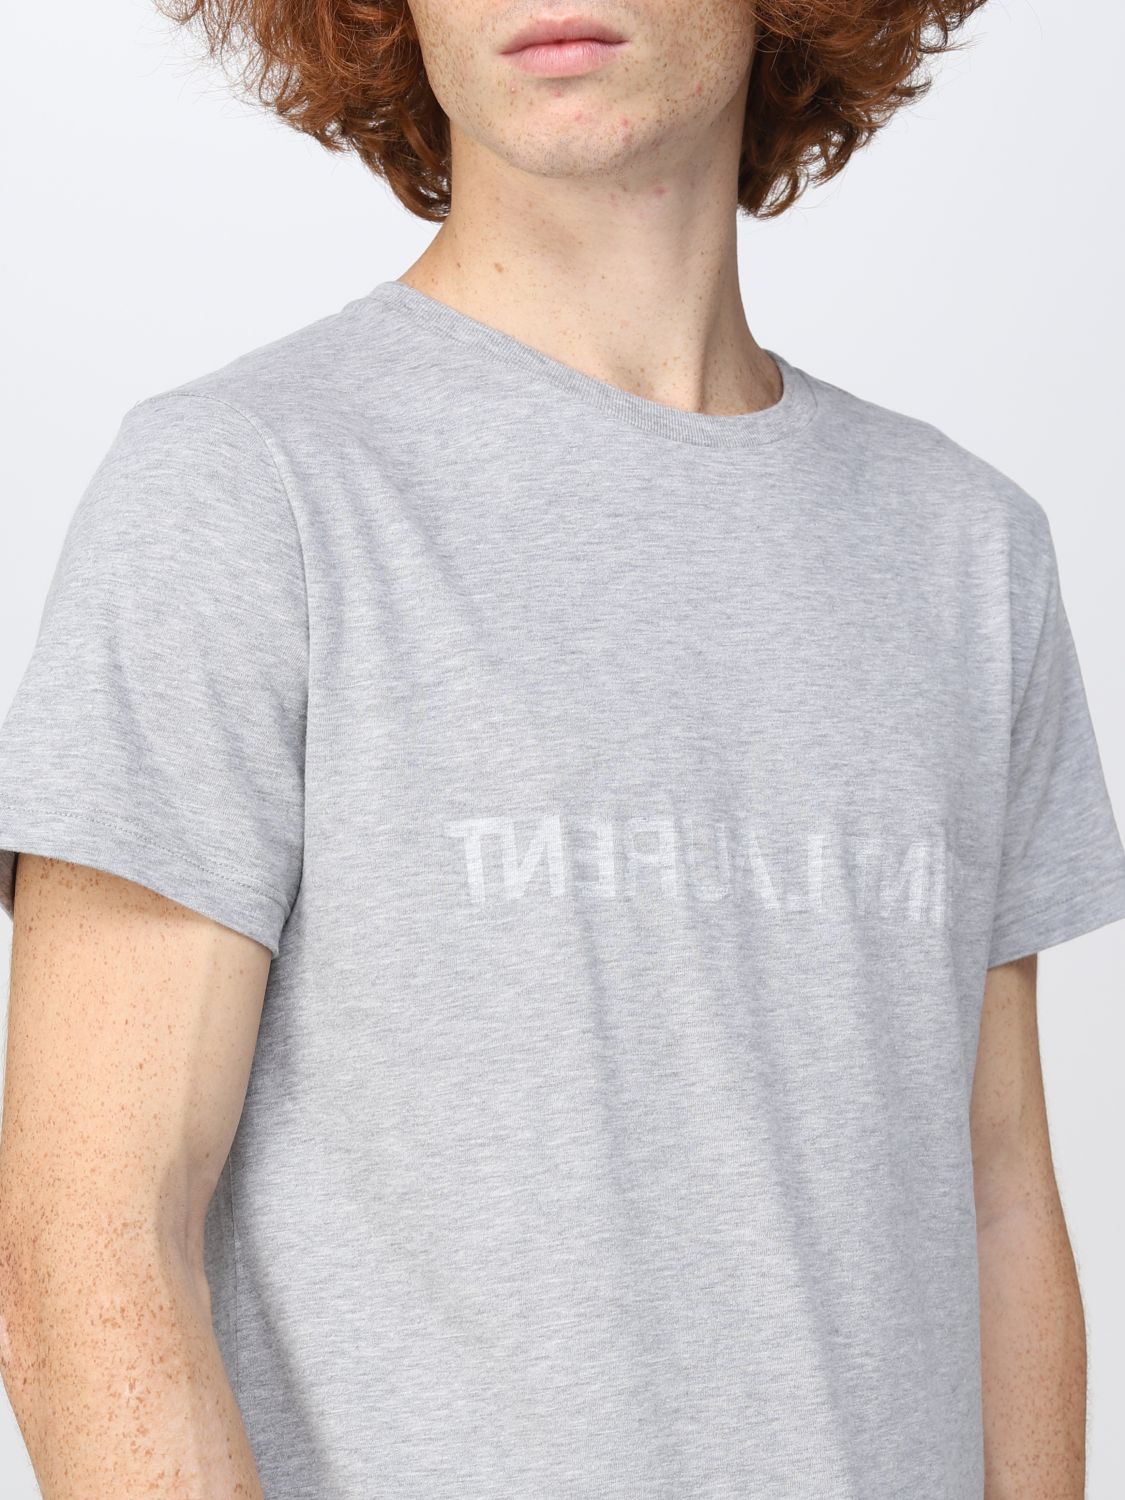 T-Shirt Saint Laurent: Saint Laurent Herren T-Shirt grau 5